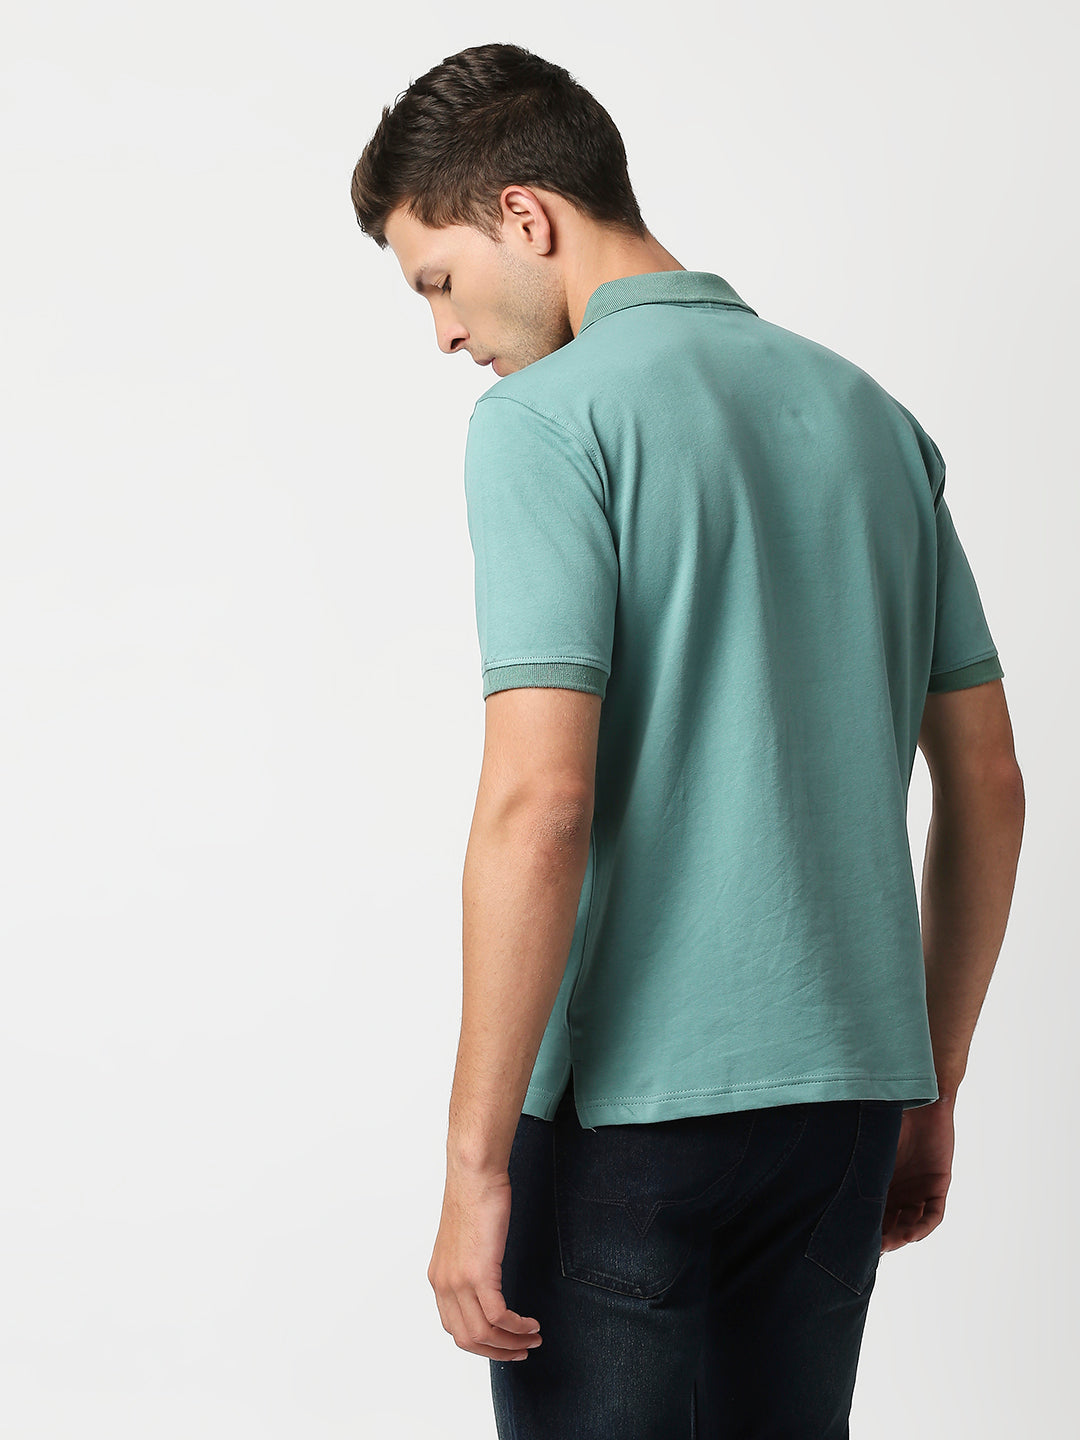 Buy Blamblack Men's Polo Plain Green Color T shirt